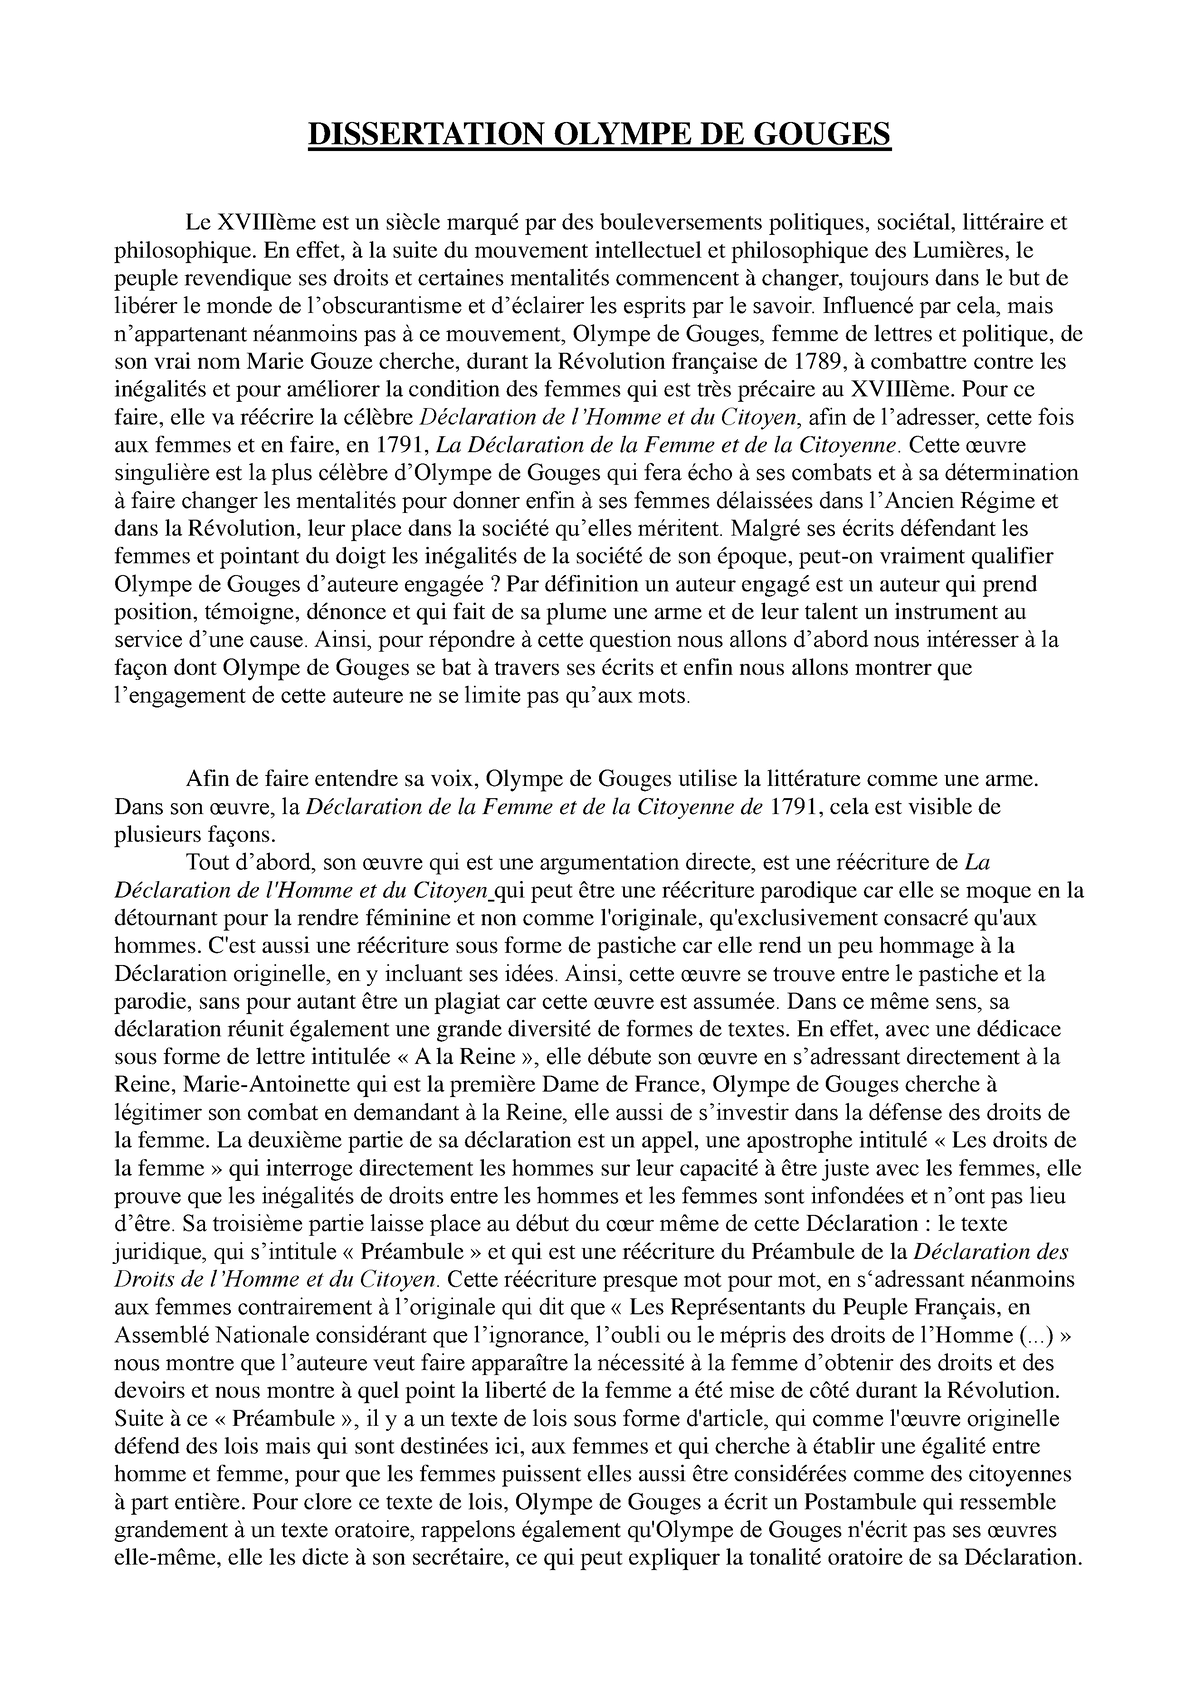 introduction olympe de gouges dissertation